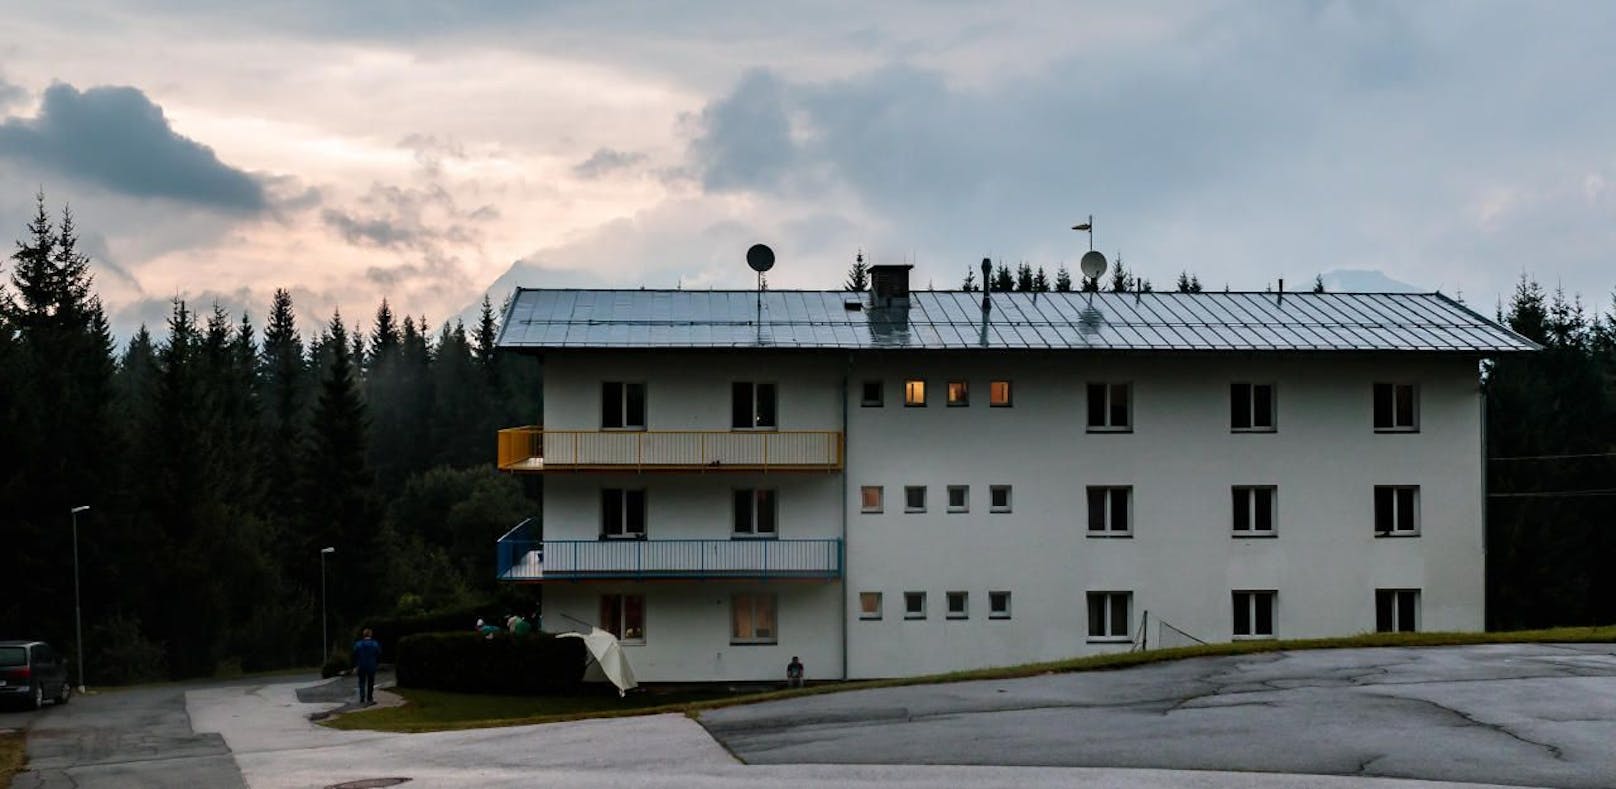 Flüchtlinge in Tiroler Heim treten in Hungerstreik